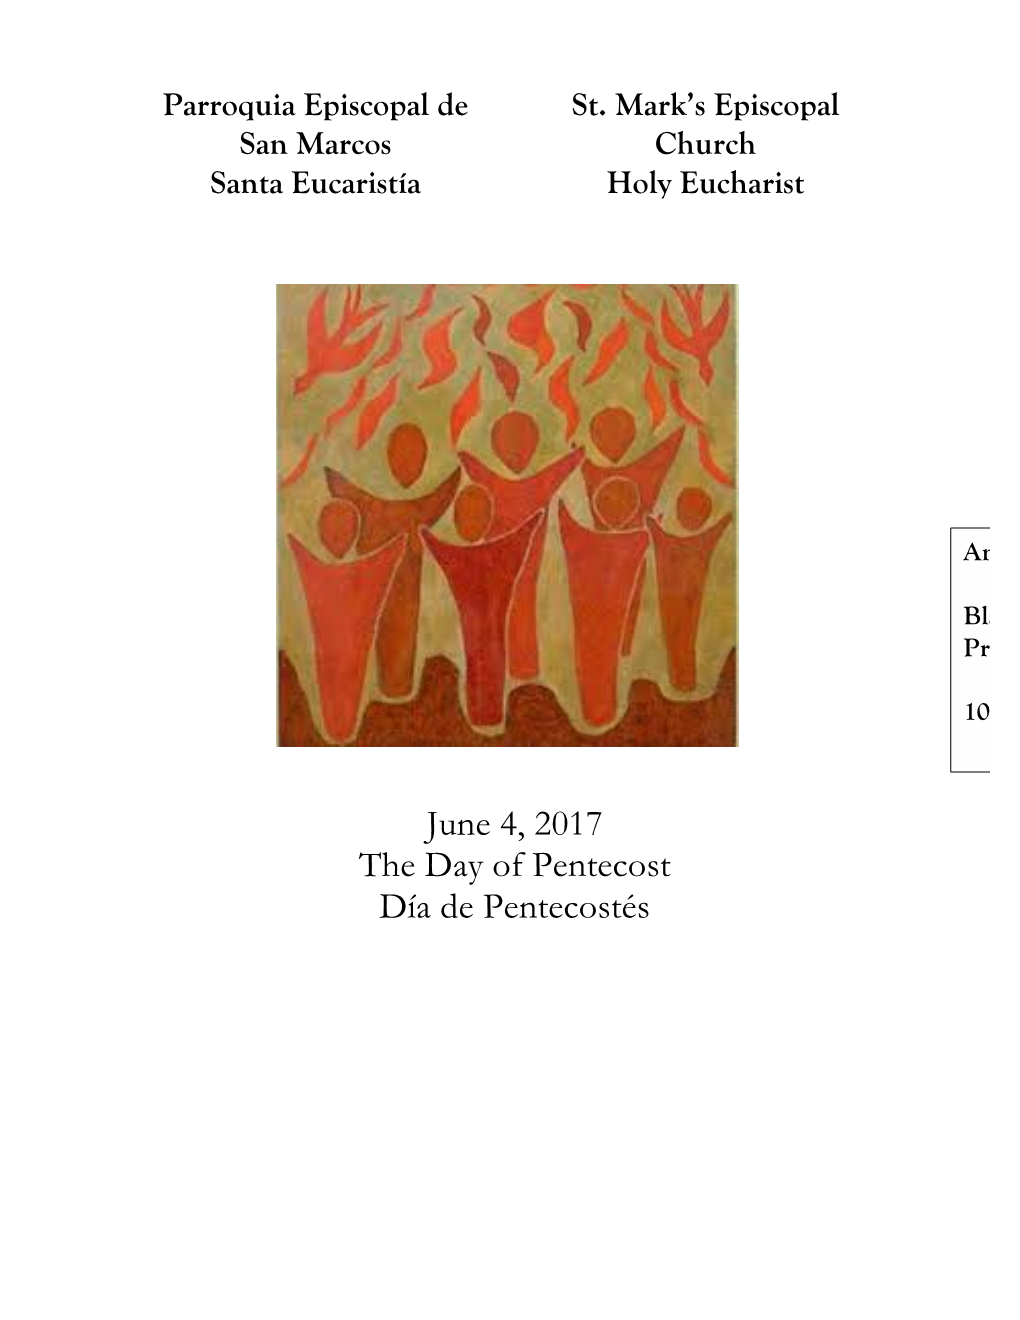 June 4, 2017 the Day of Pentecost Día De Pentecostés